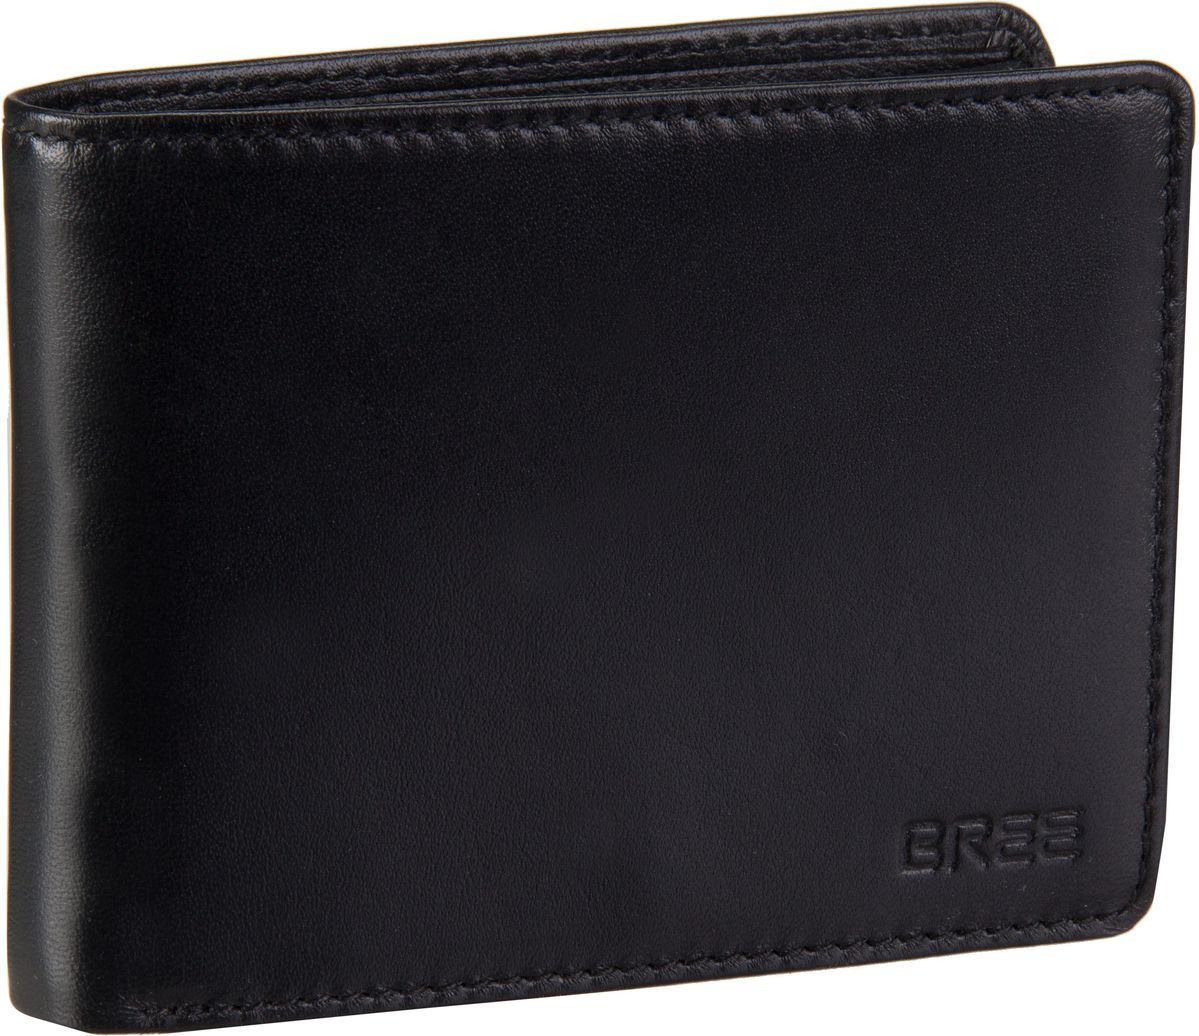 Bree Pocket New 114 - Black Soft